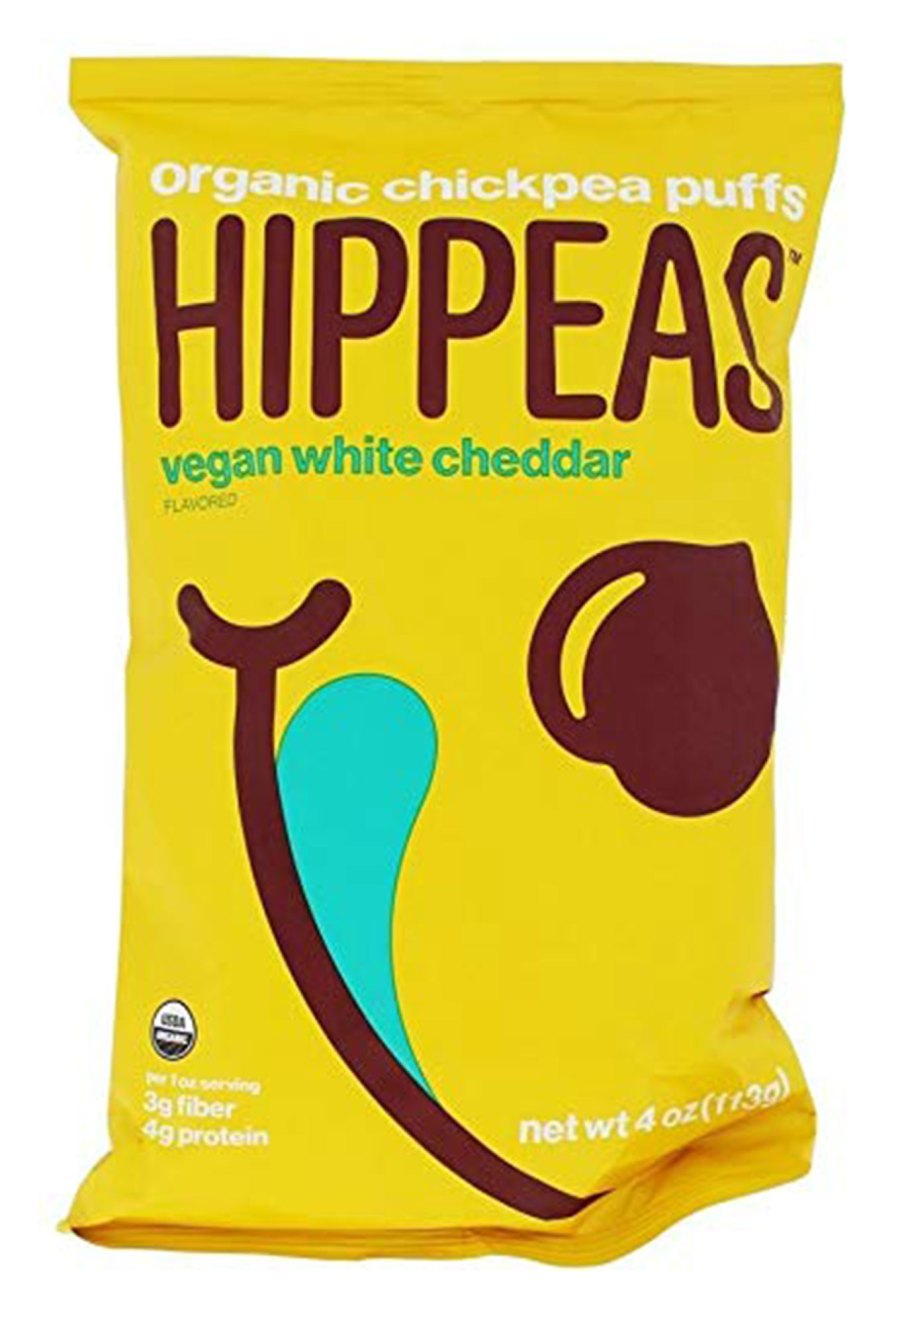 Hippeas Vegan White Cheddar Organic Chickpea Puffs